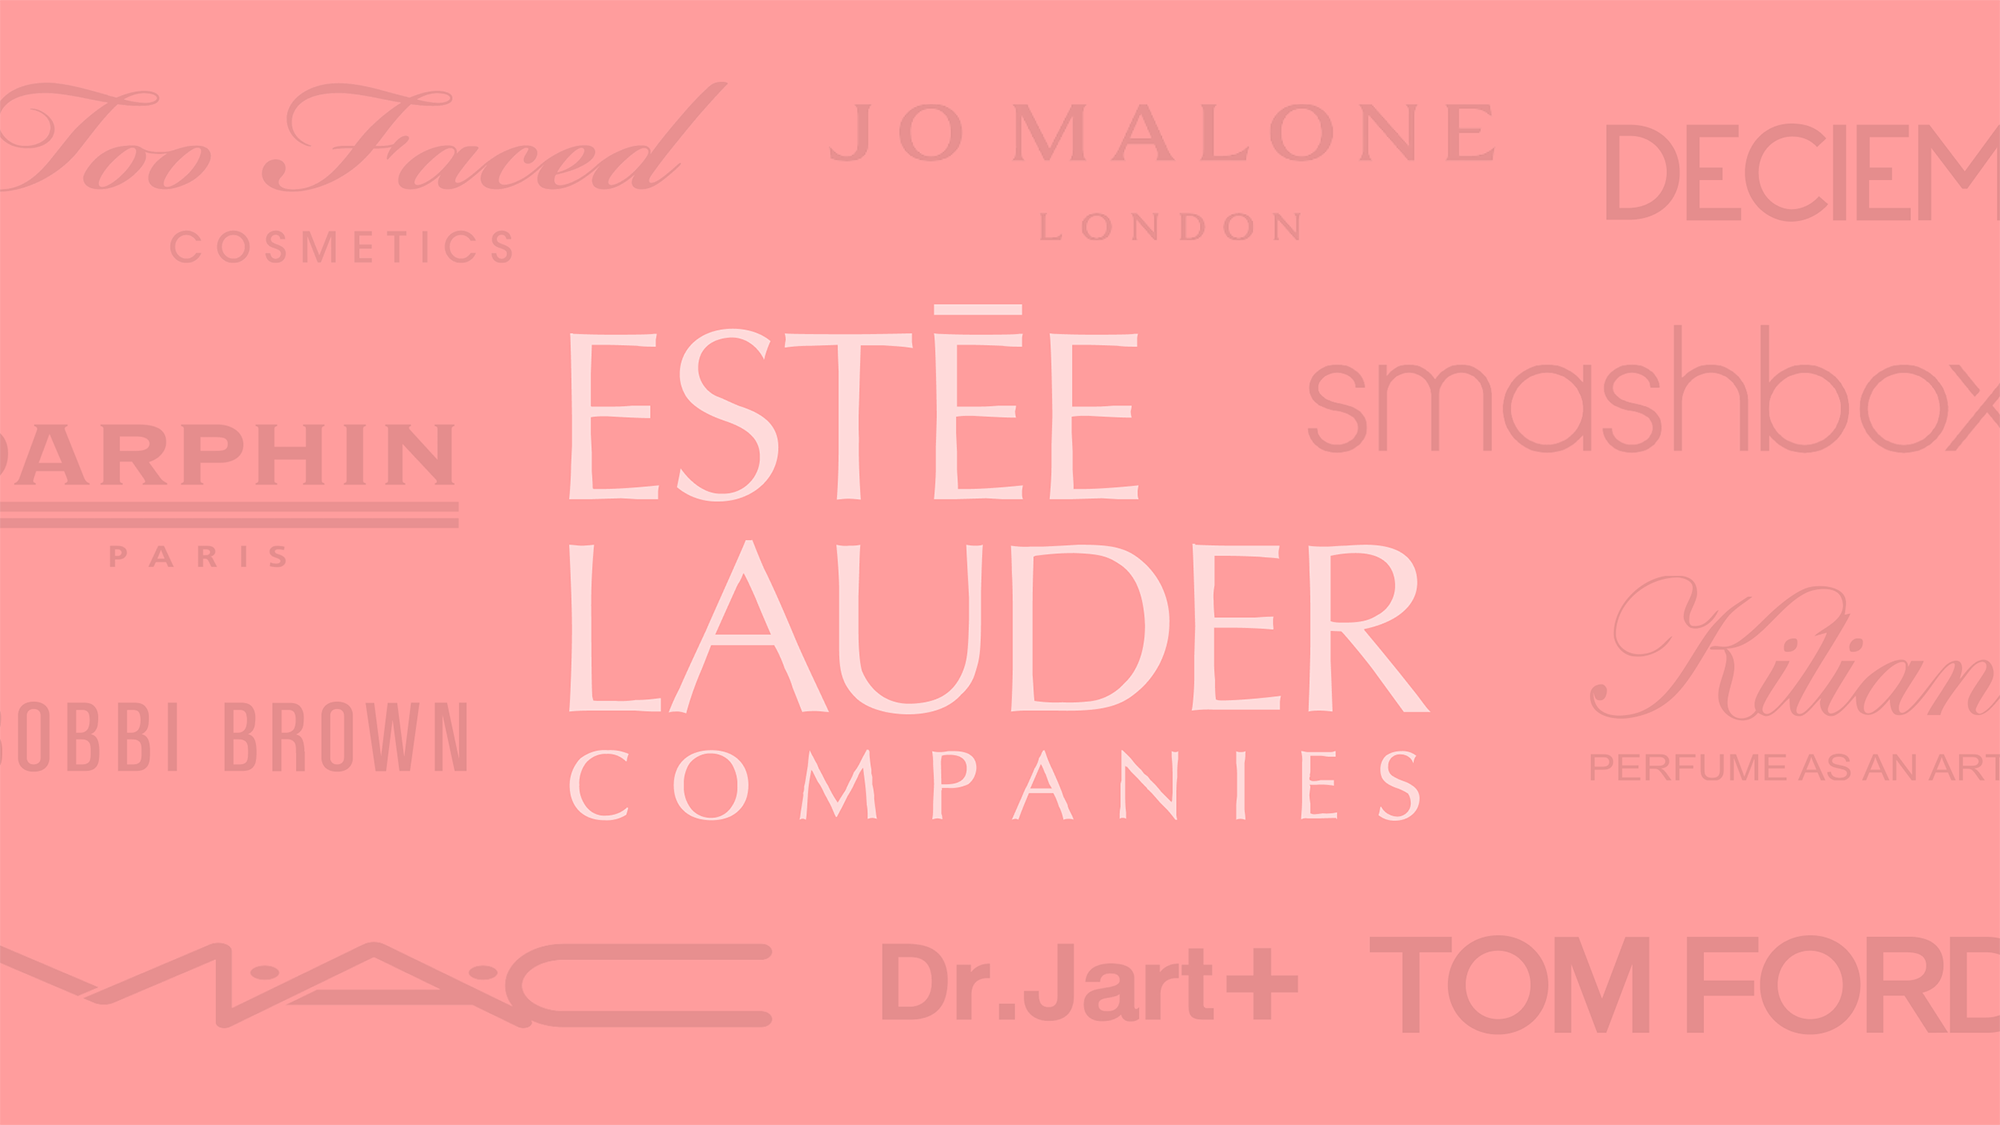 Logos illustrating decades of Mergers & Acquisitions for The Estée Lauder Companies